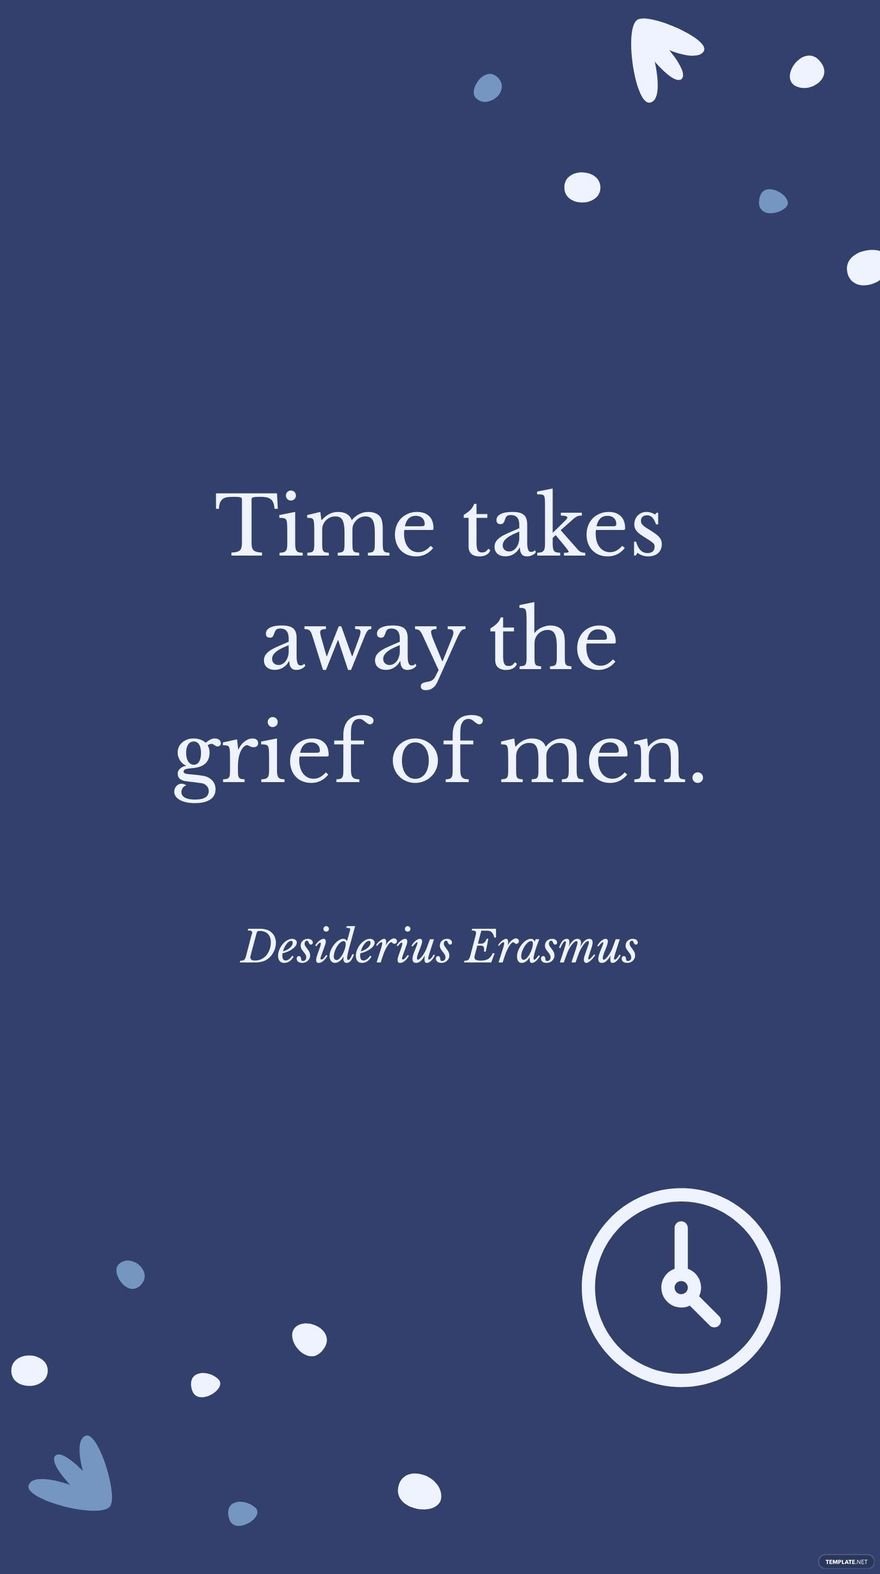 Desiderius Erasmus - Time takes away the grief of men.